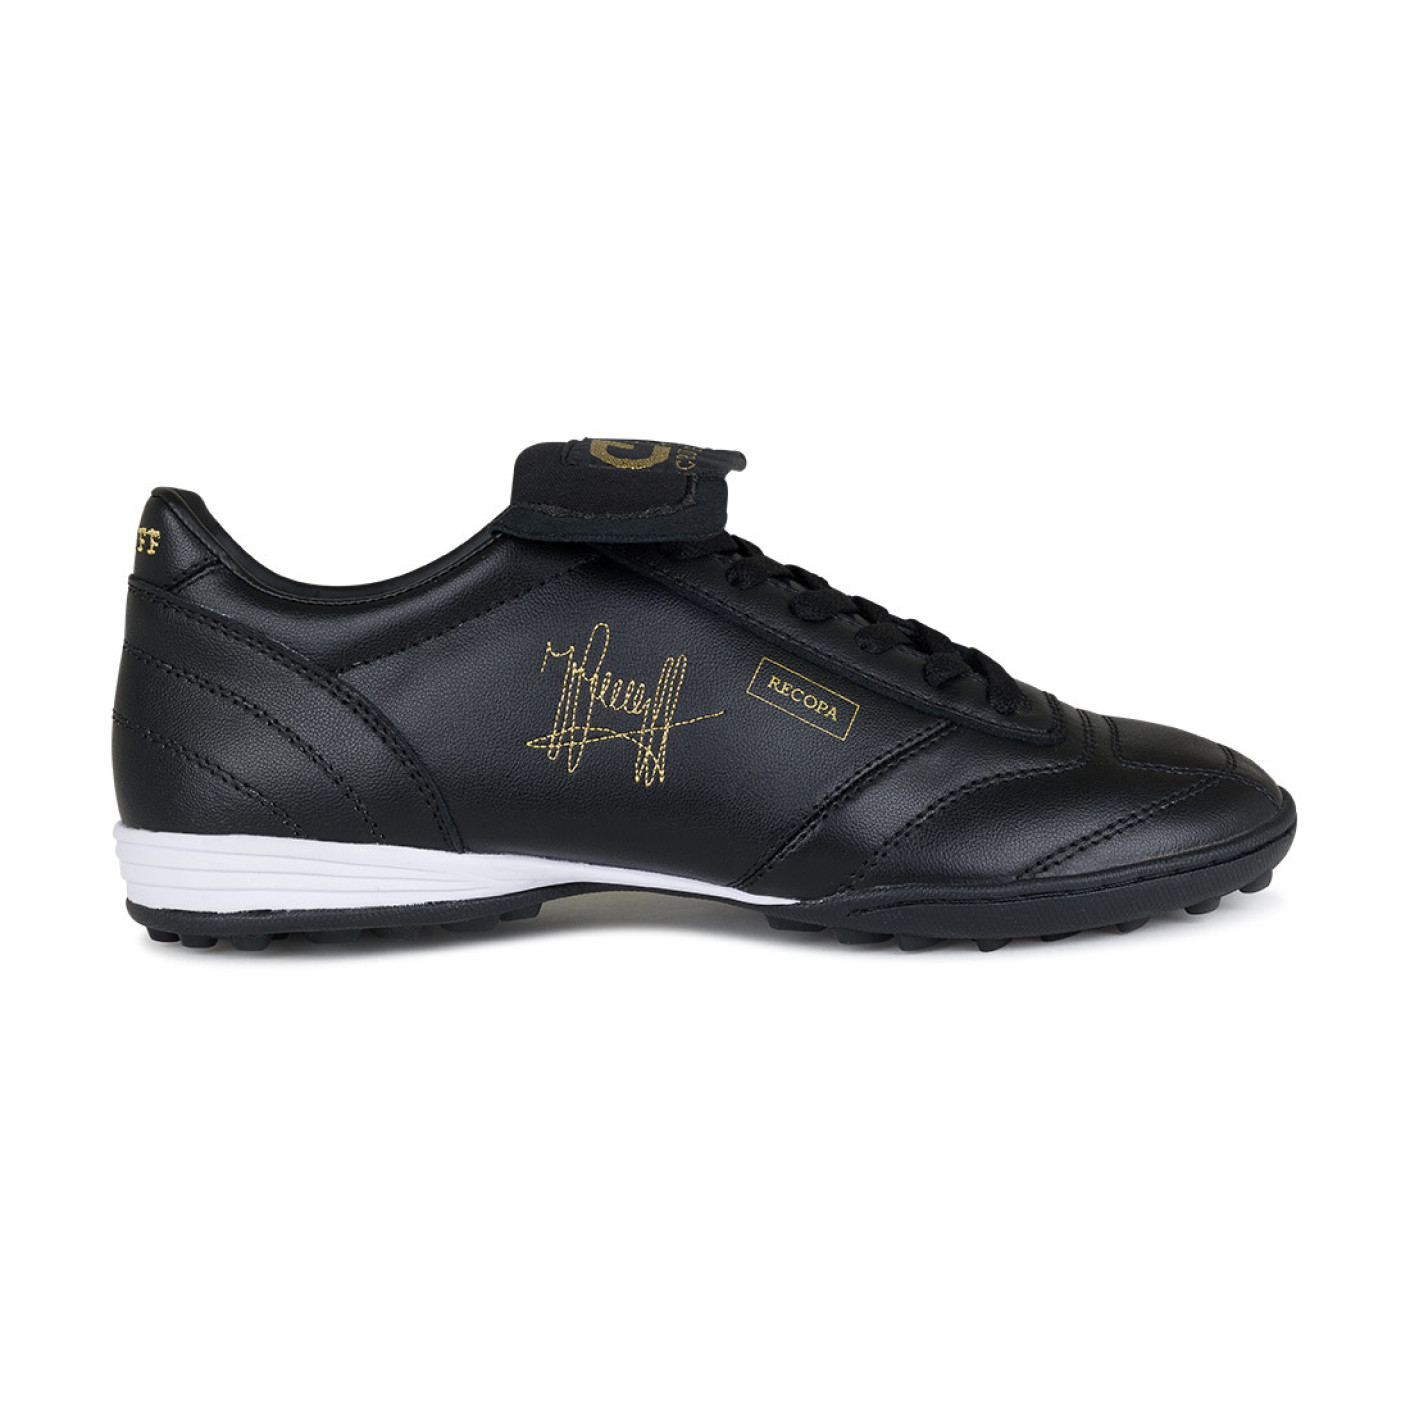 Chaussures de football Cruyff Retro Turf (TF) noires dorées